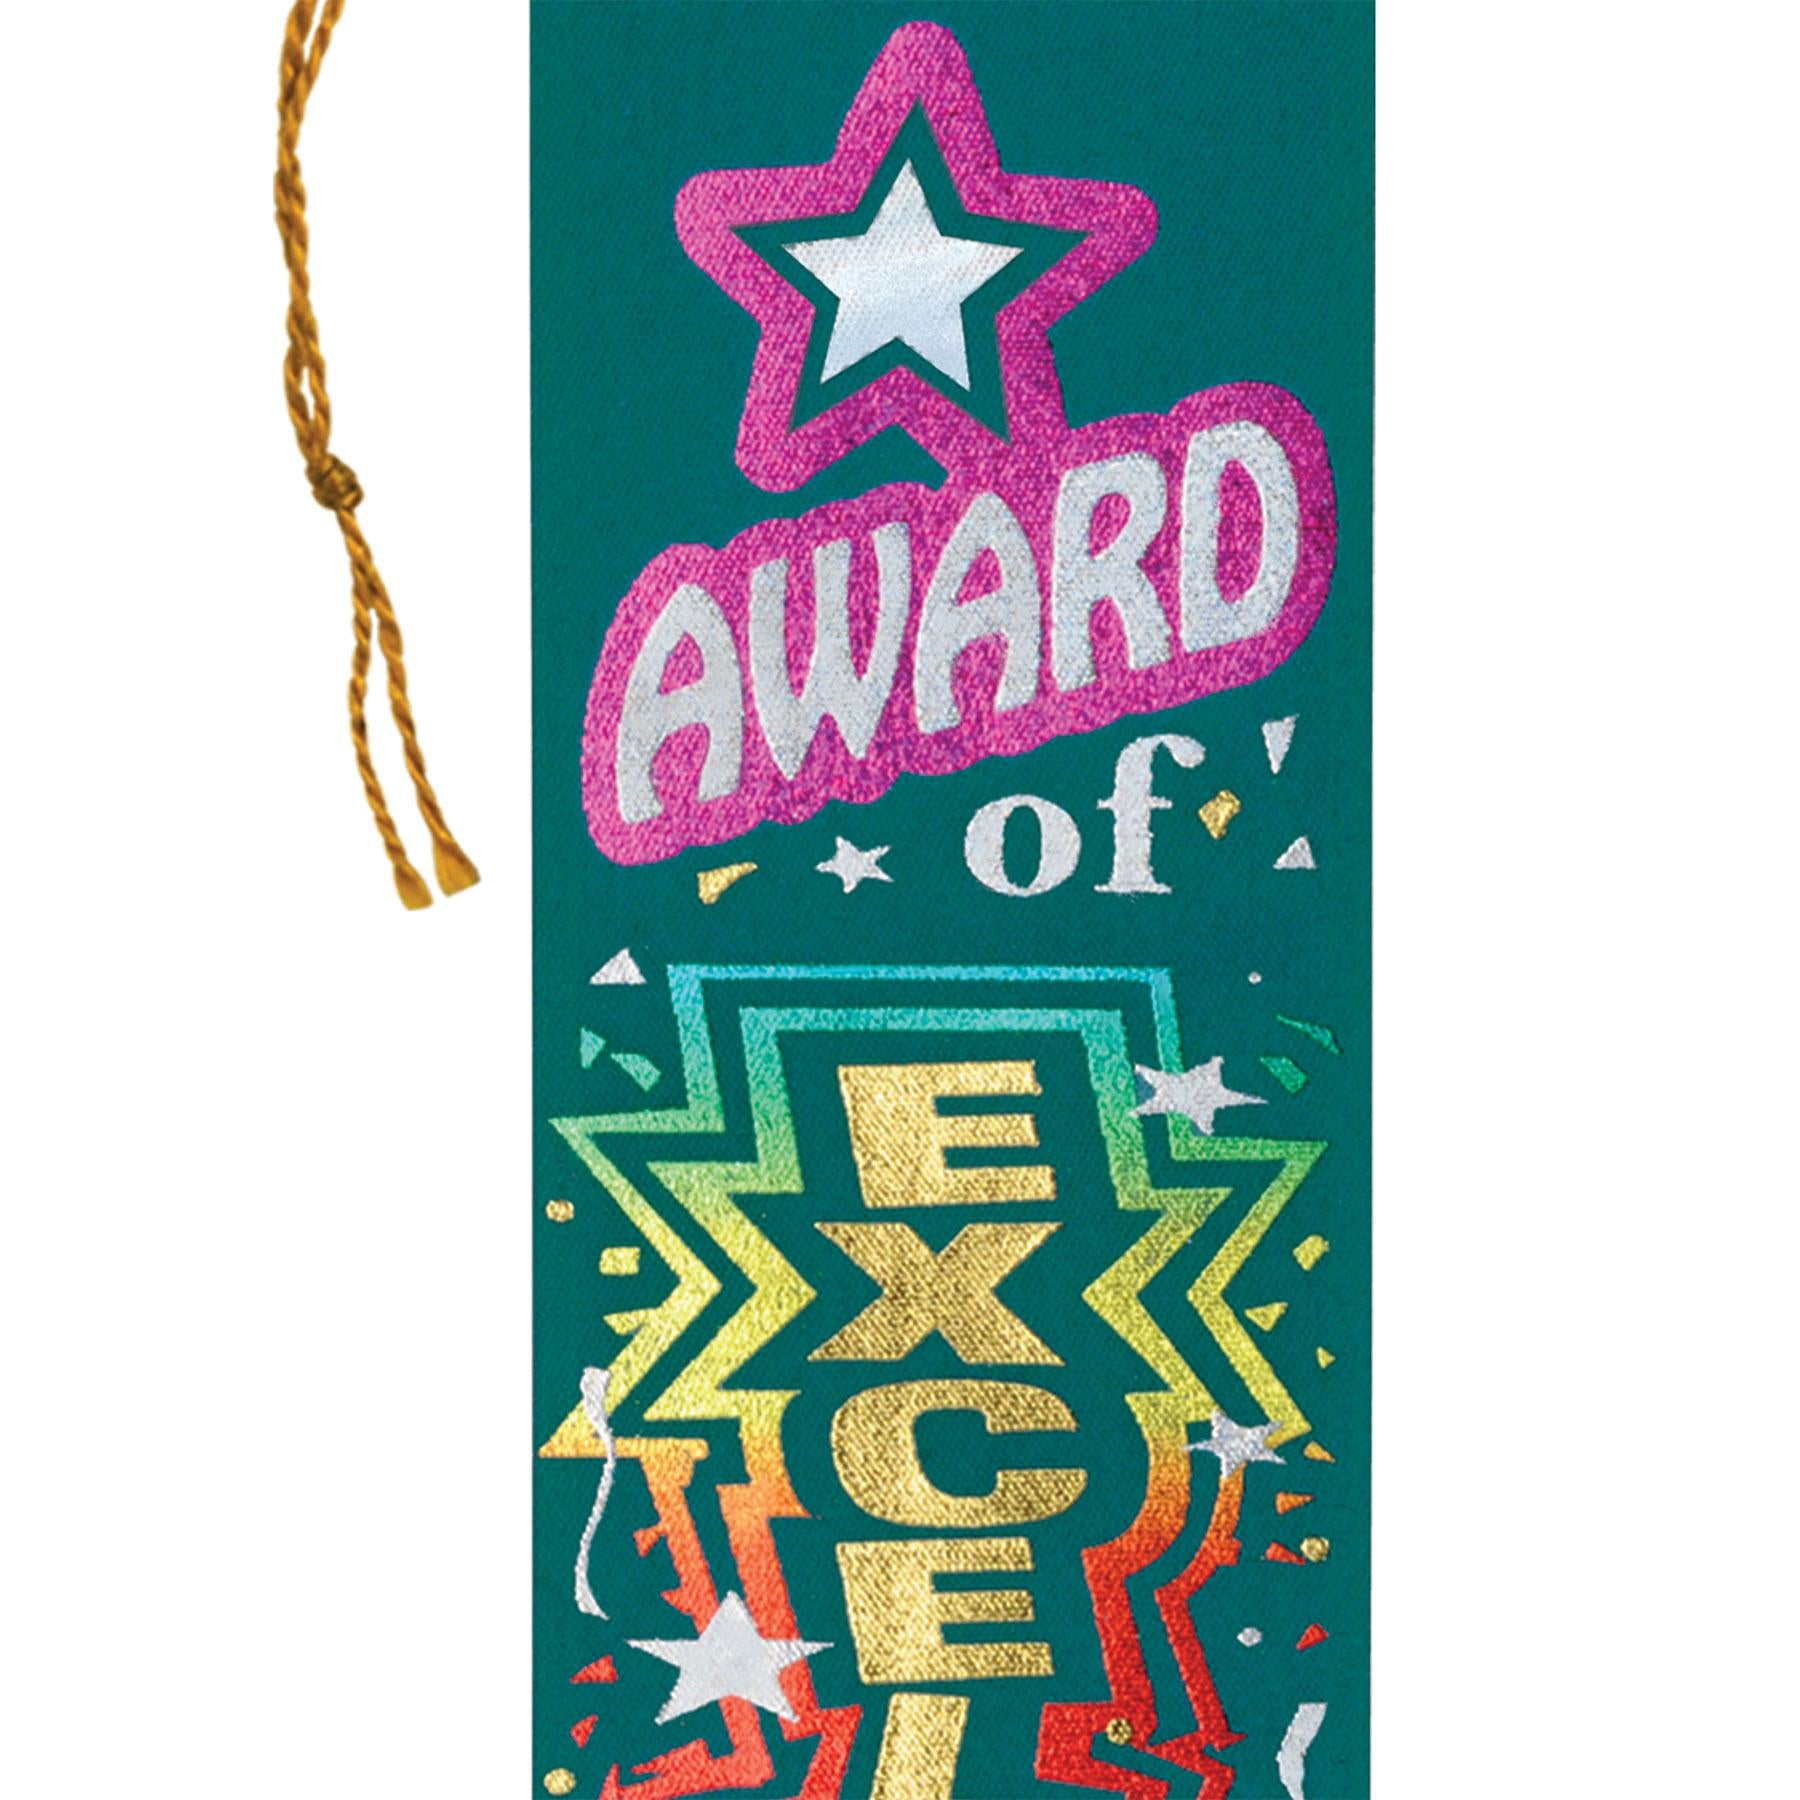 Beistle Award Of Excellence Award Ribbon